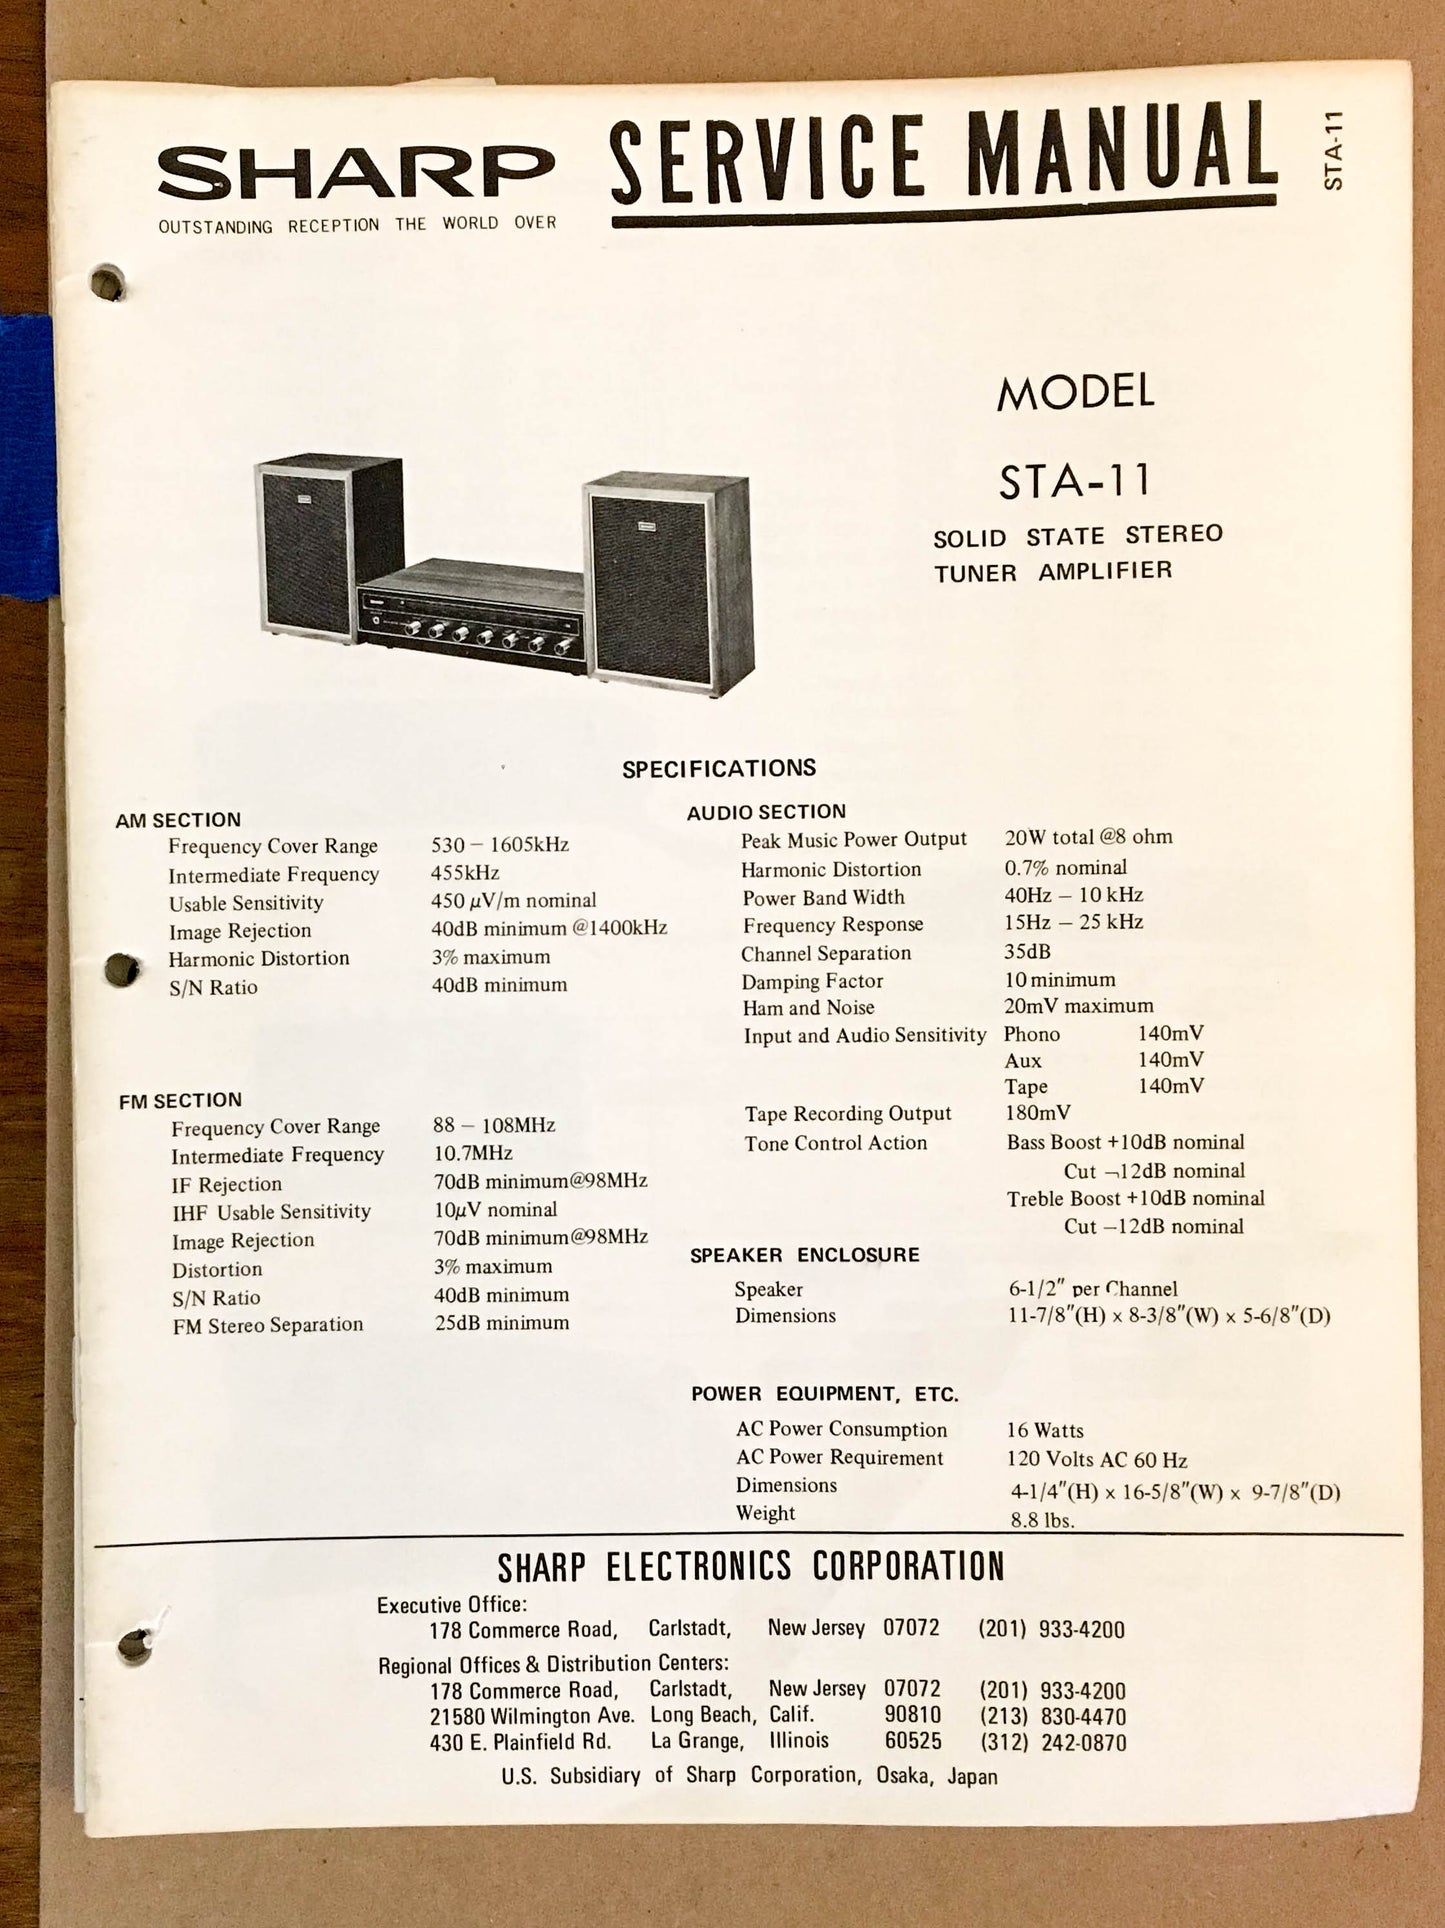 Sharp STA-11 Tuner / Amplifier  Service Manual *Original*